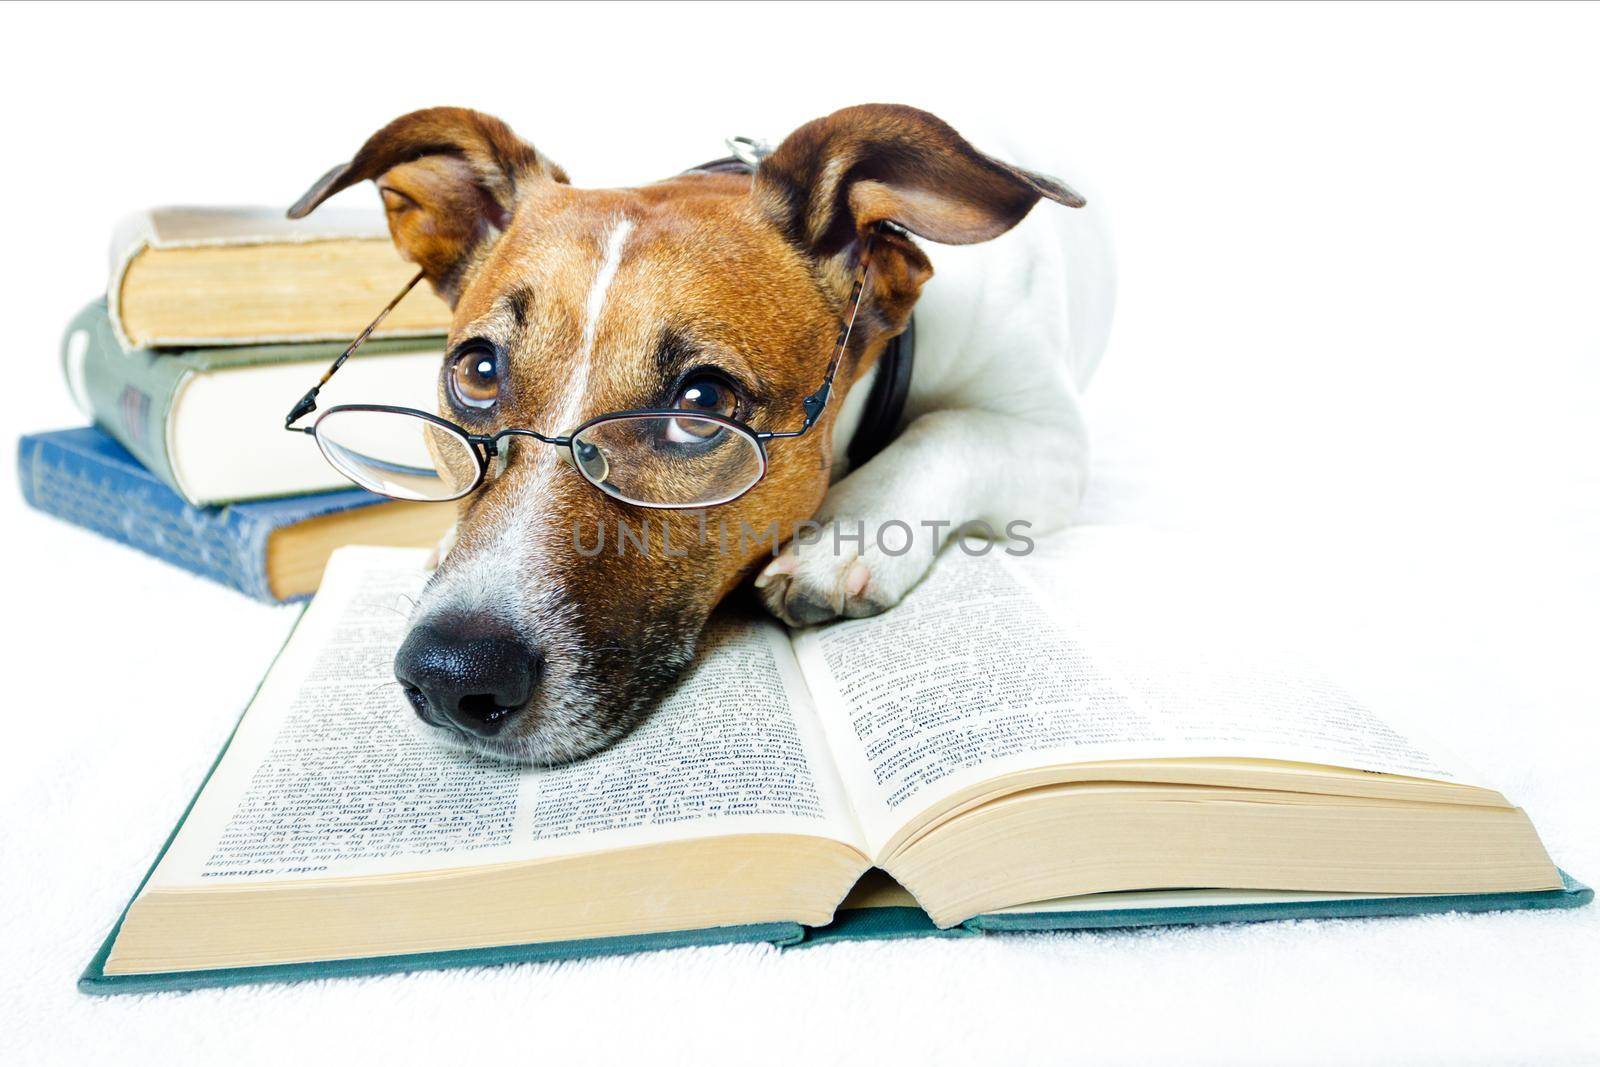 dog reading book